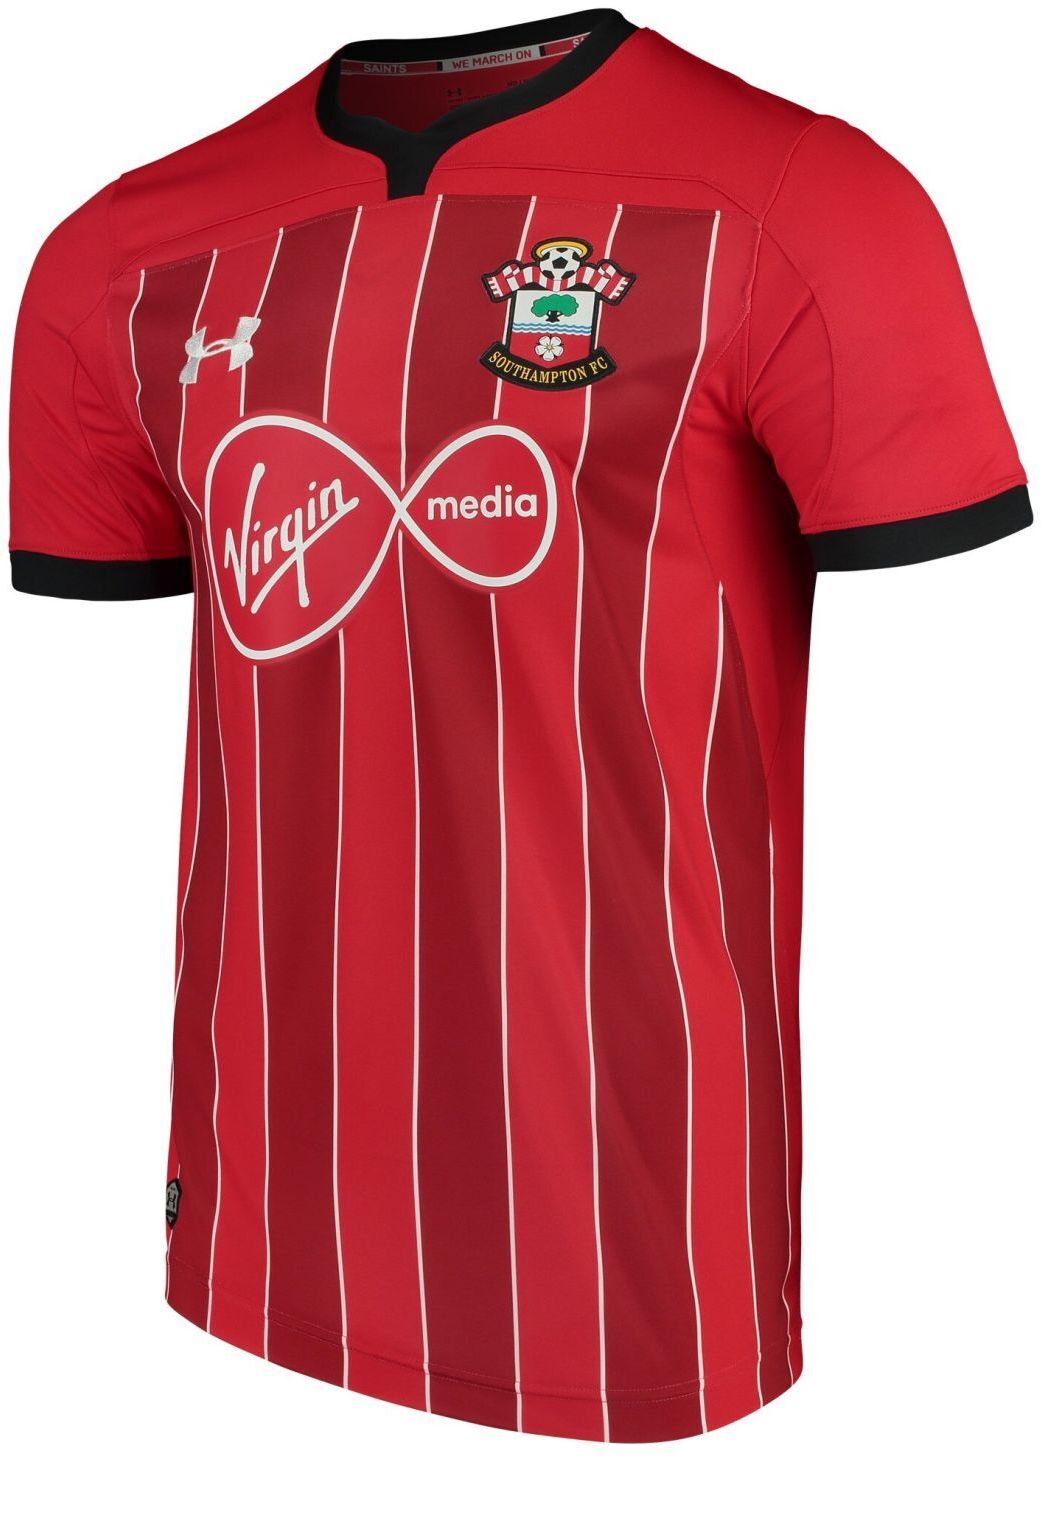 Southampton F.C. derde shirt seizoen 2018/2019